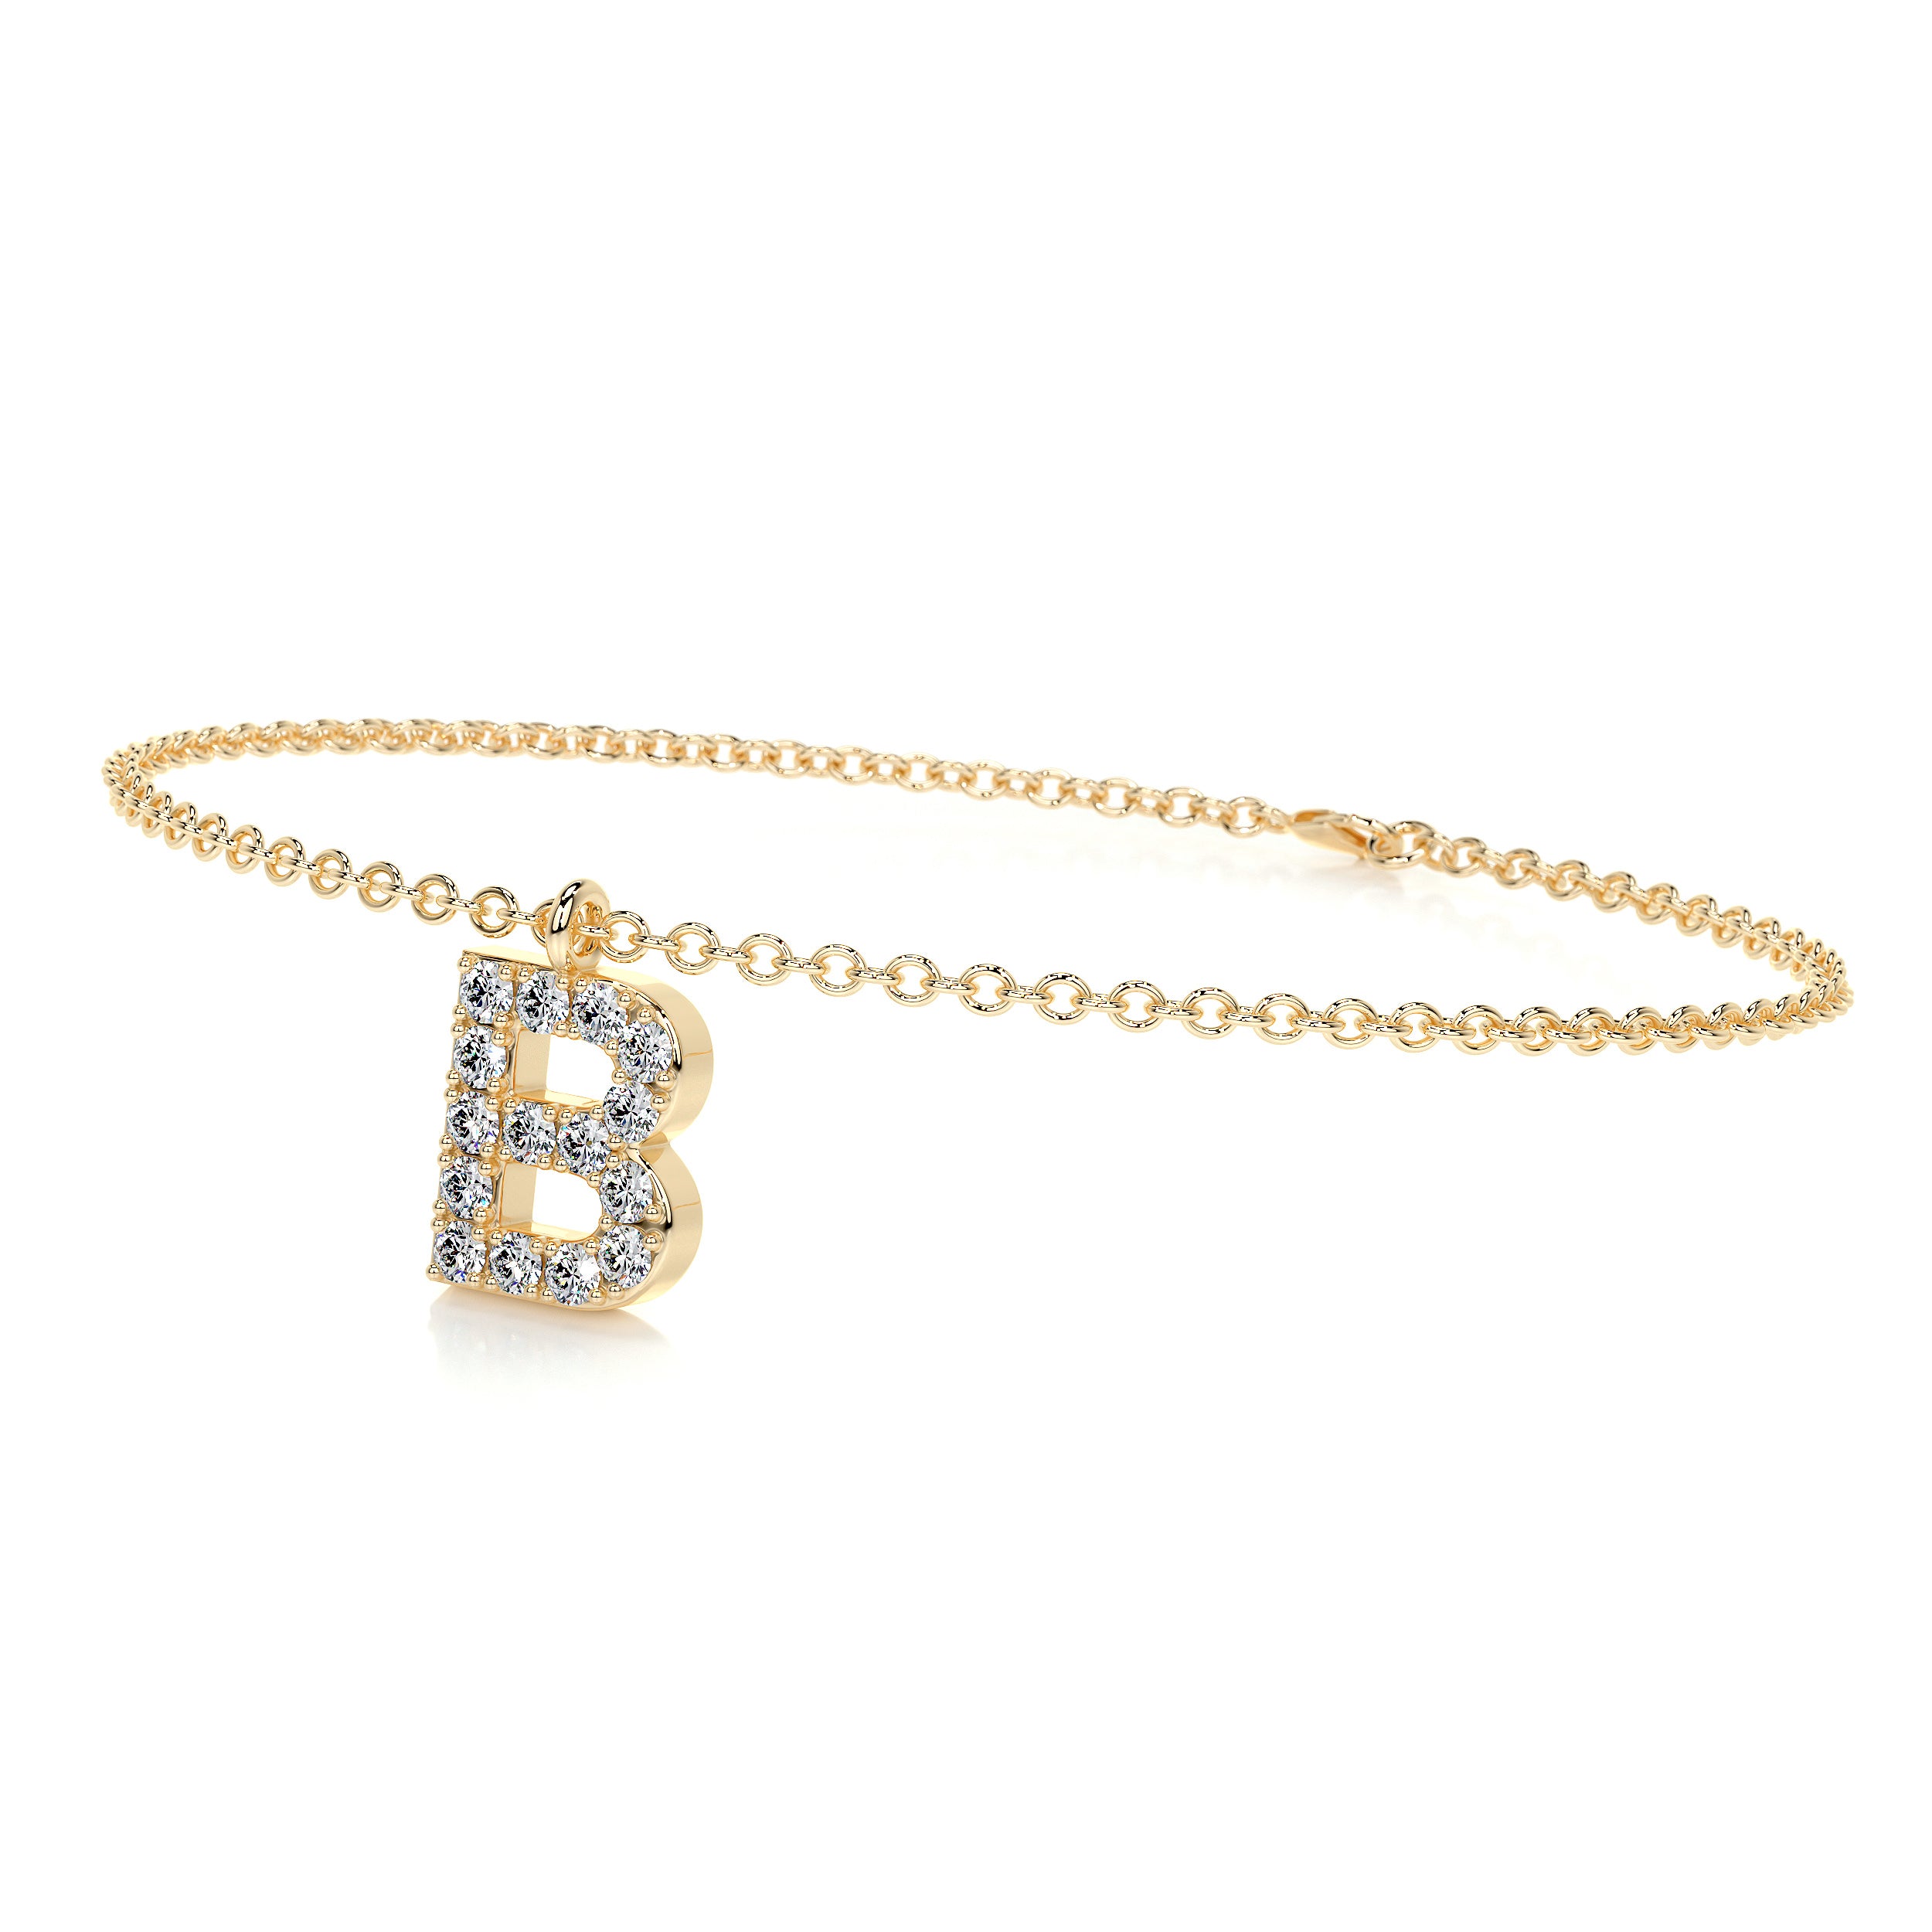 Barbara Letter Diamonds Bracelet   (0.15 Carat) -18K Yellow Gold